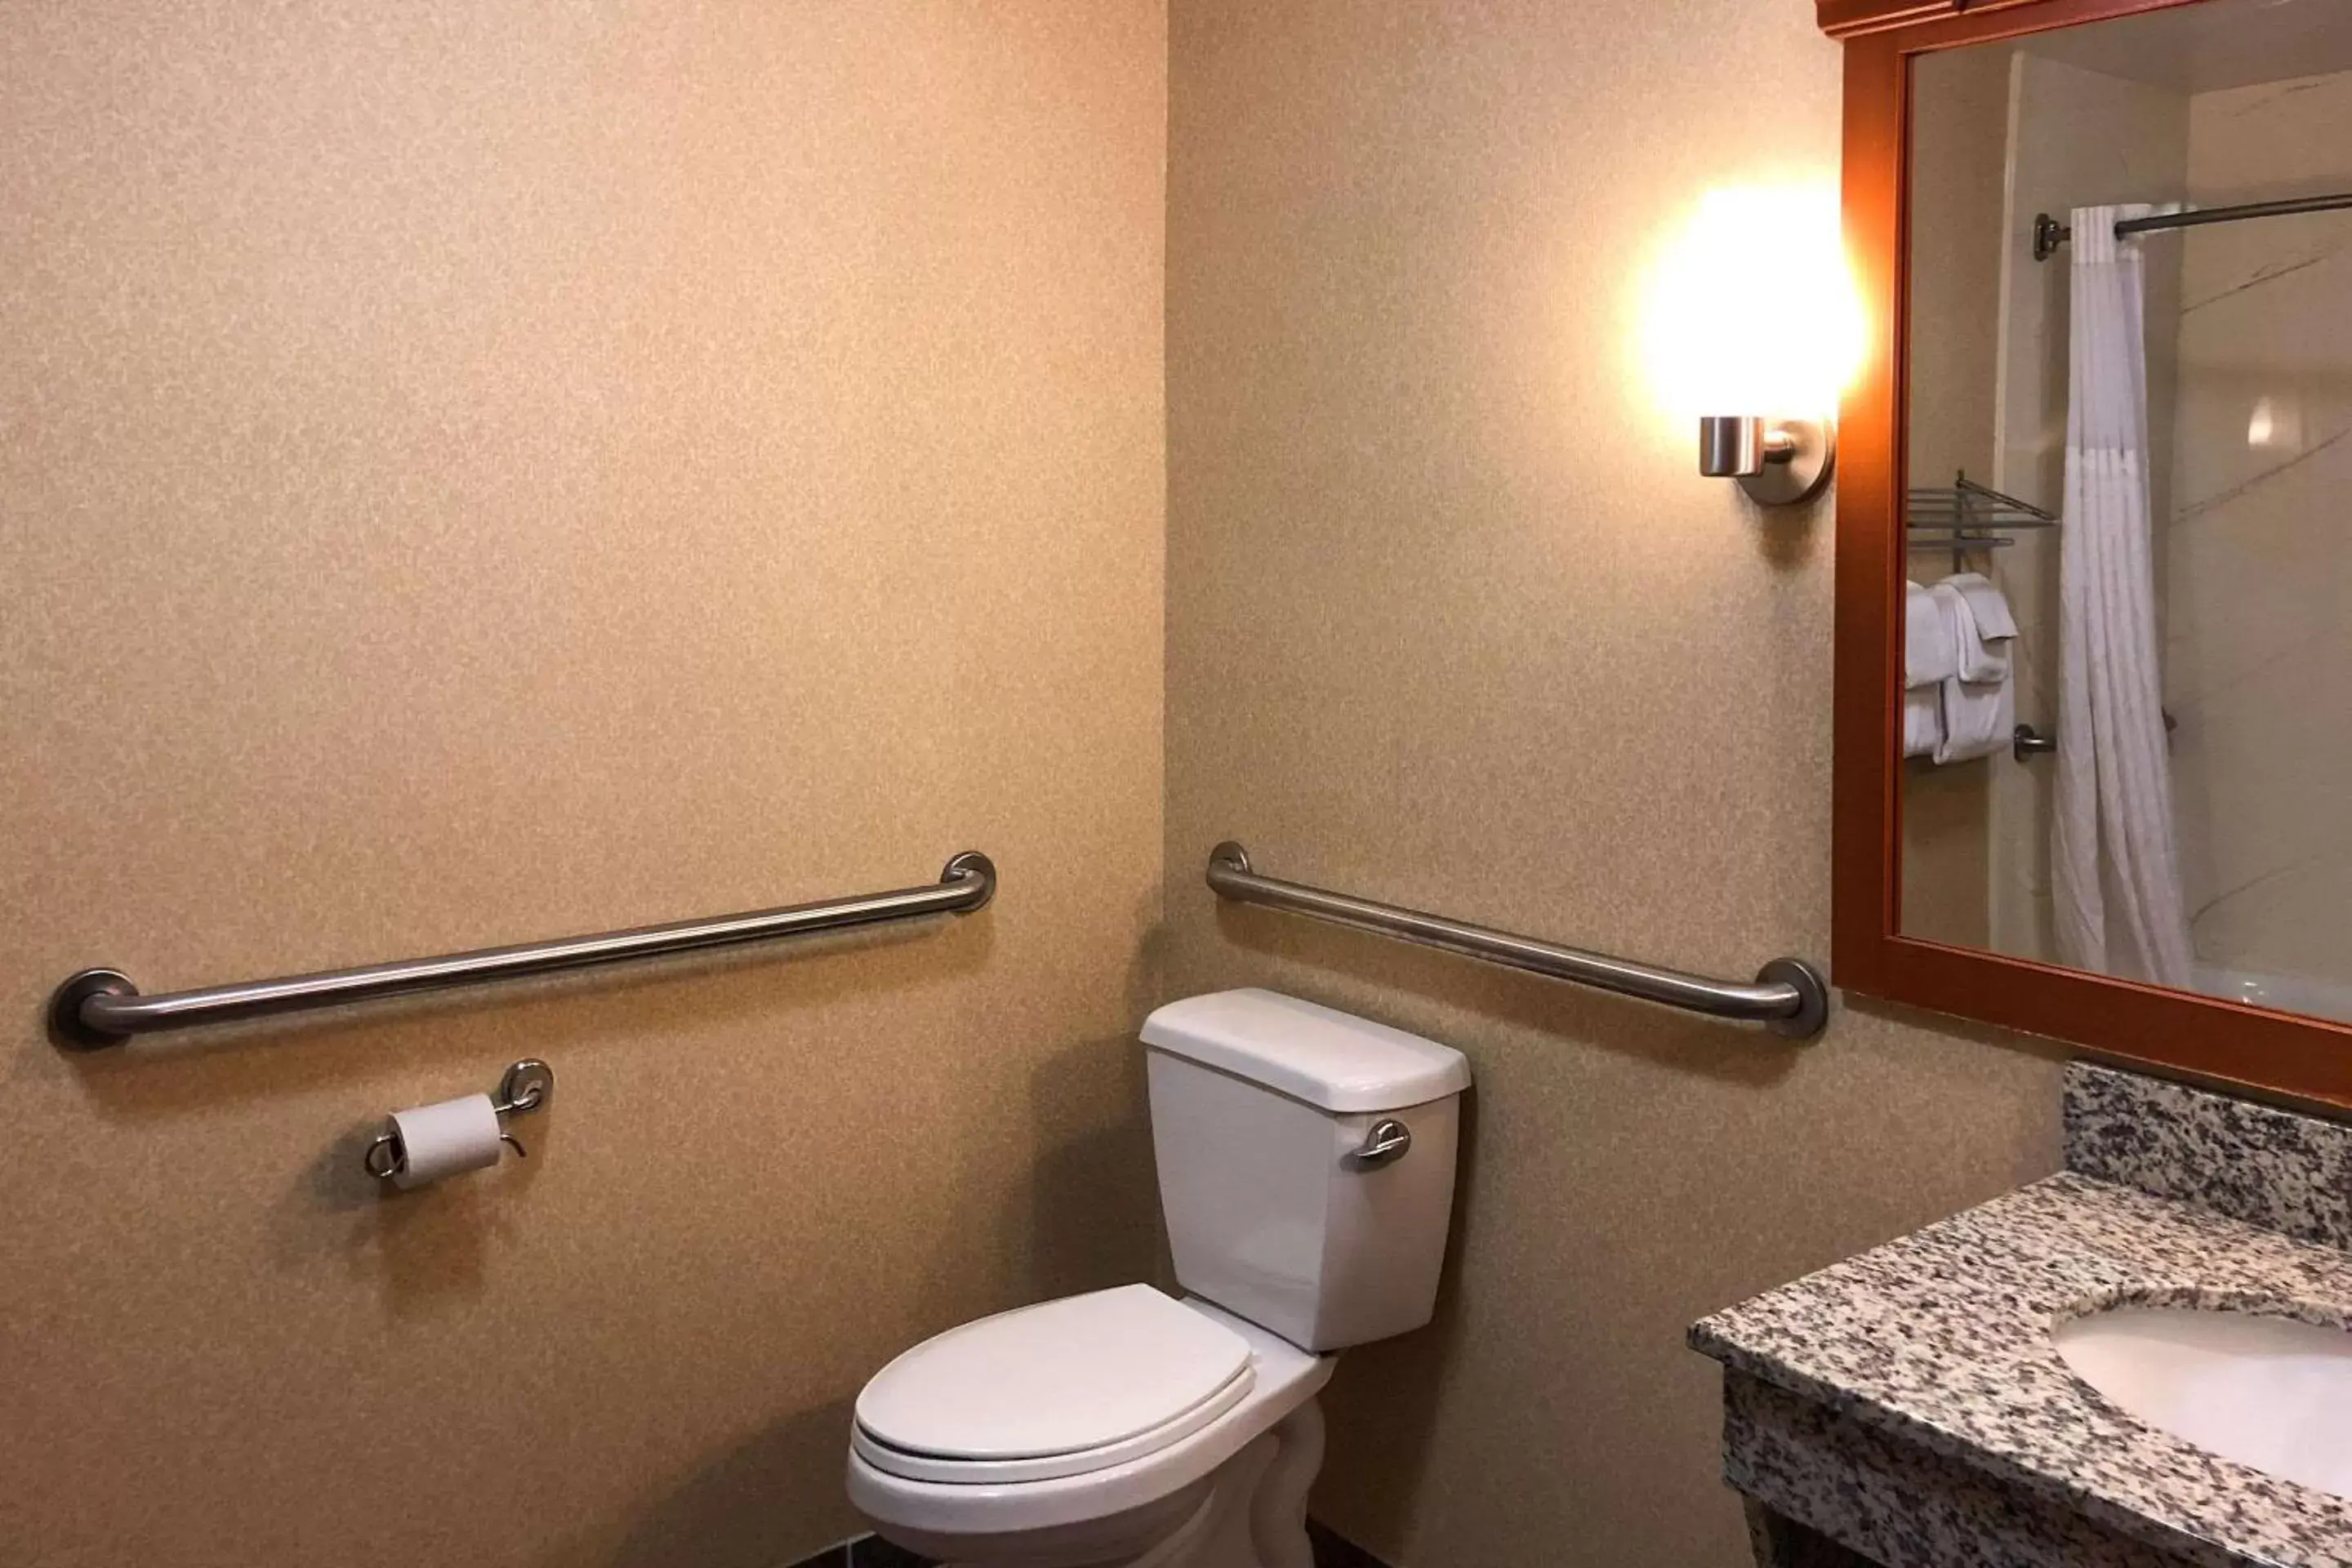 Photo of the whole room, Bathroom in Comfort Inn Ogden near Event Center